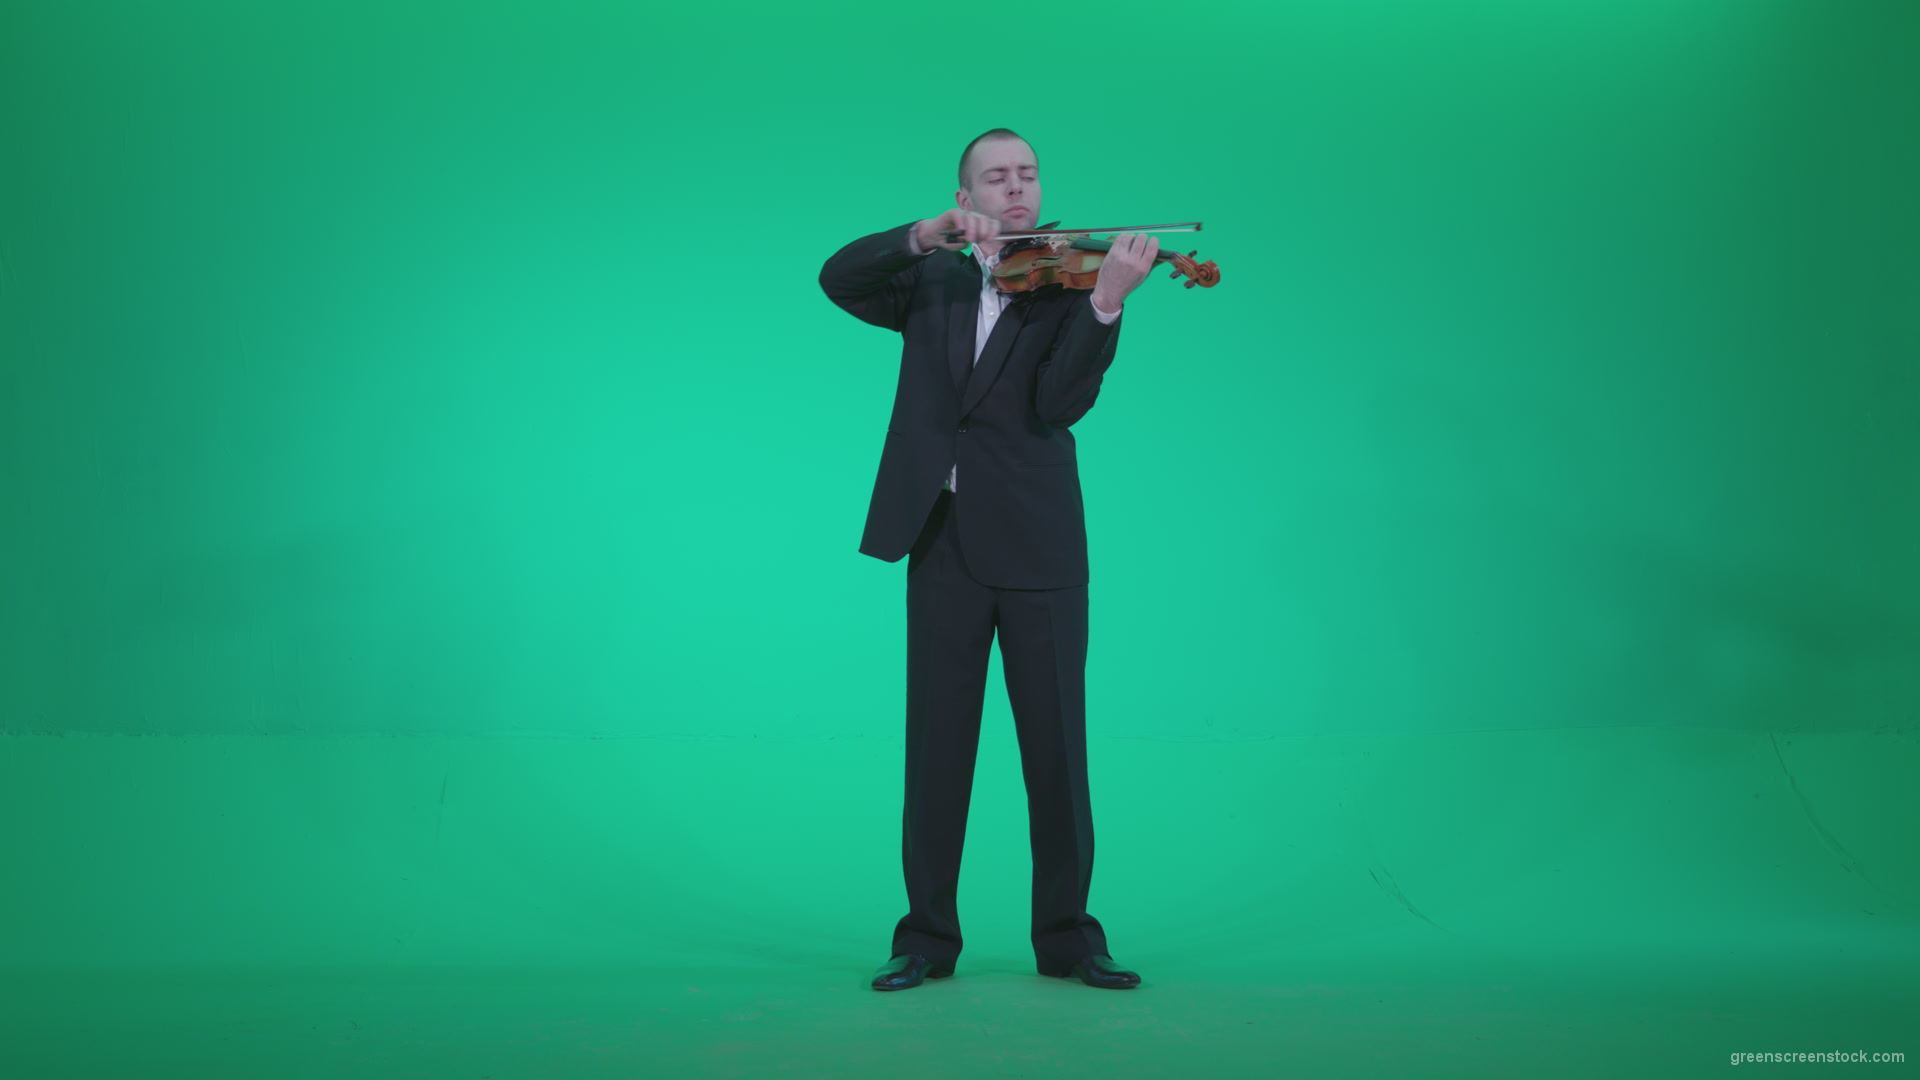 Professional-Violin-player-man-z1_007 Green Screen Stock